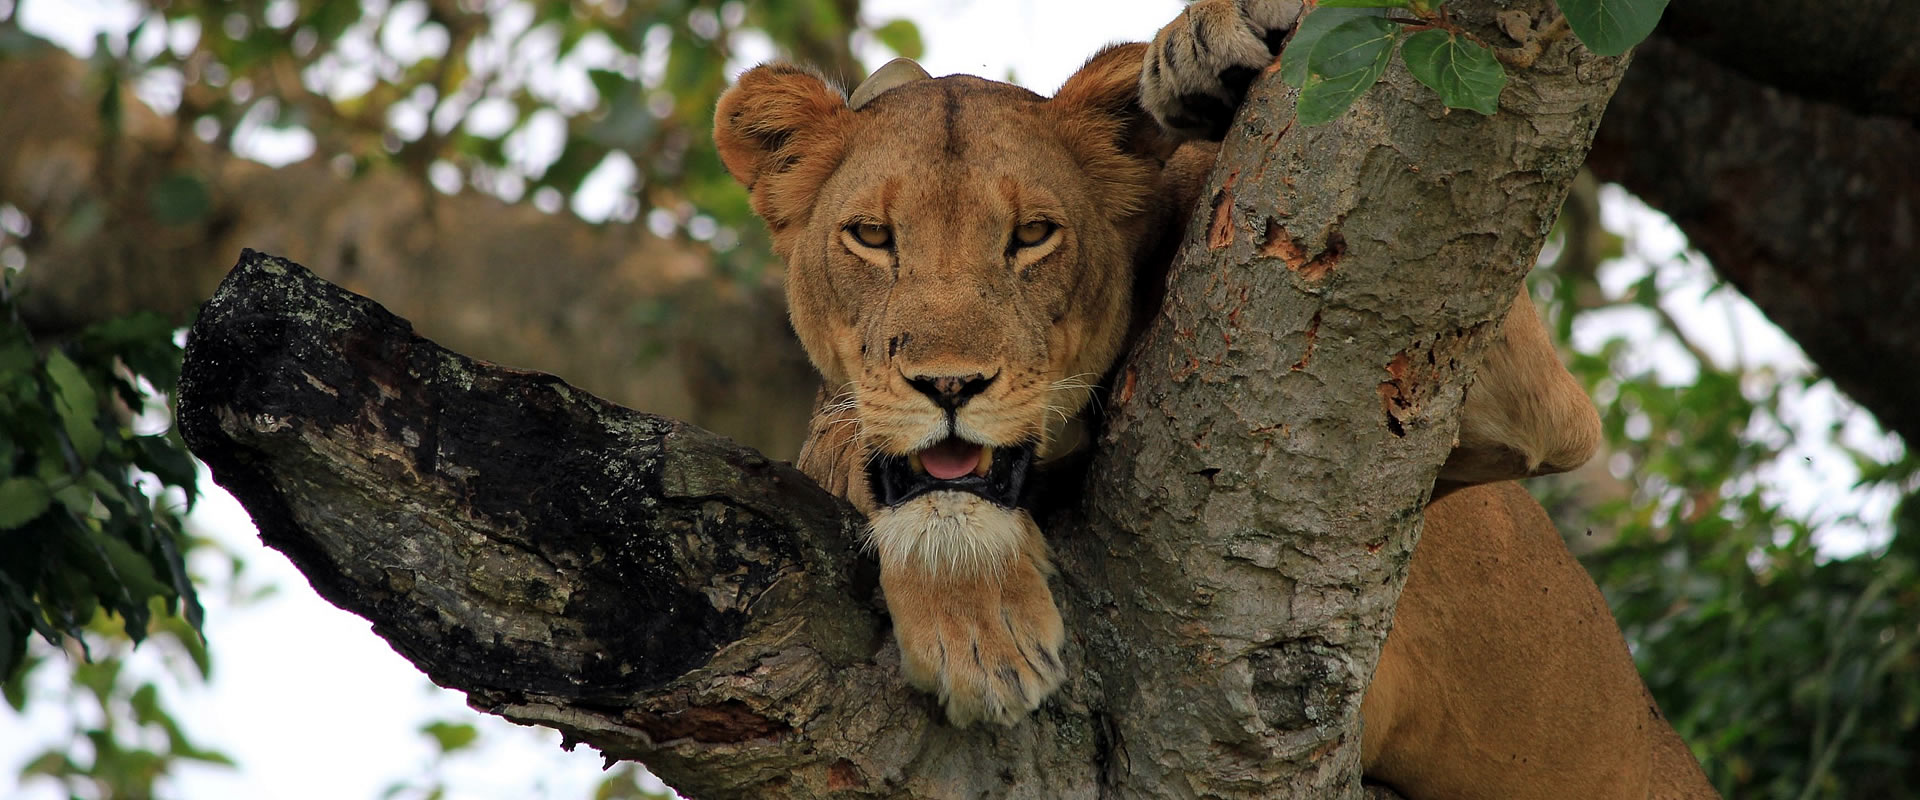 queen elizabeth safari park uganda